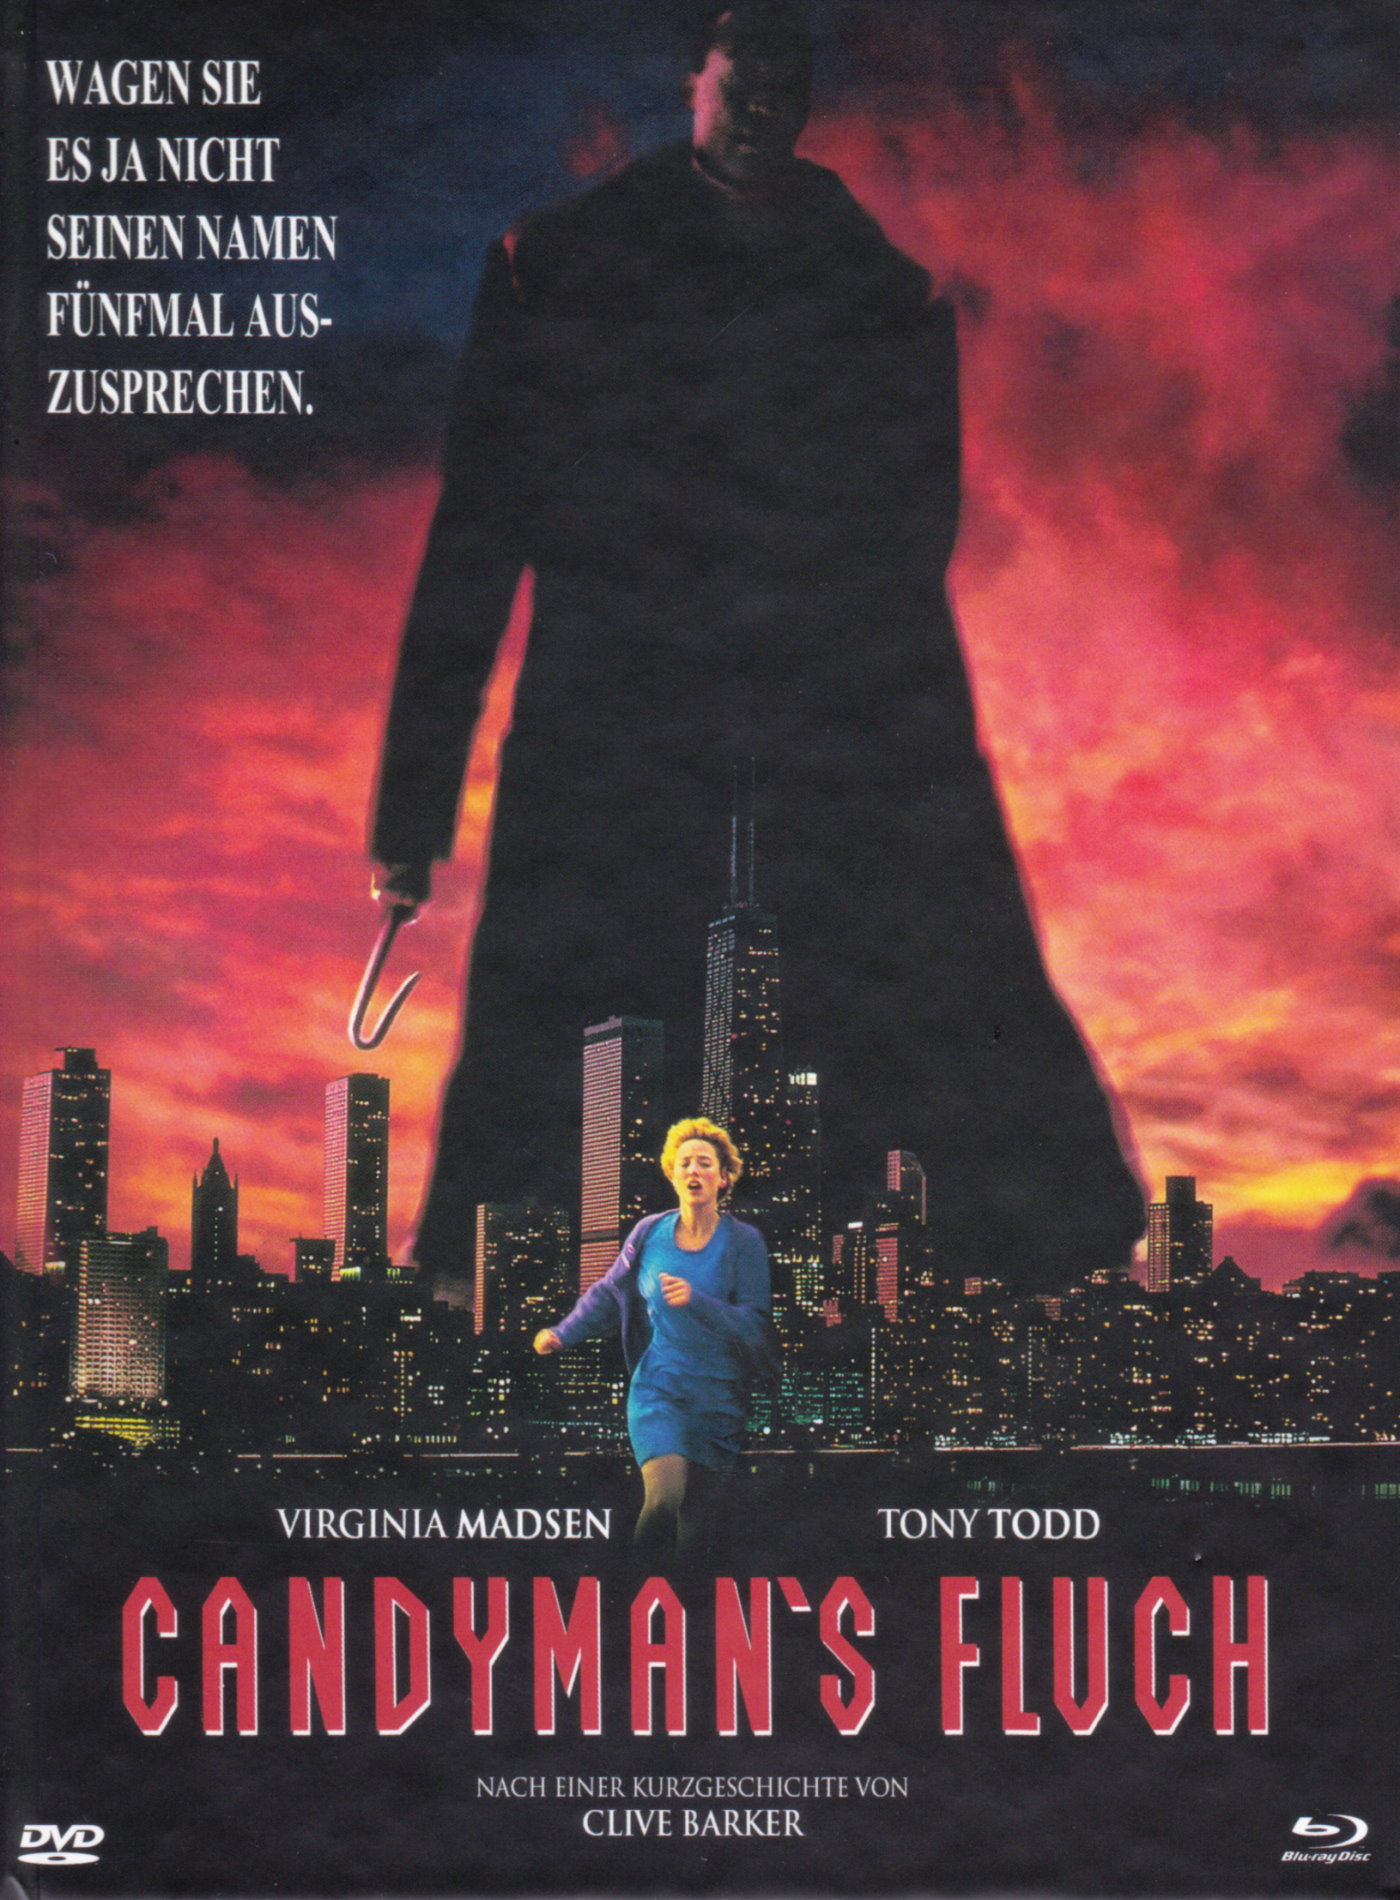 Cover - Candyman's Fluch.jpg